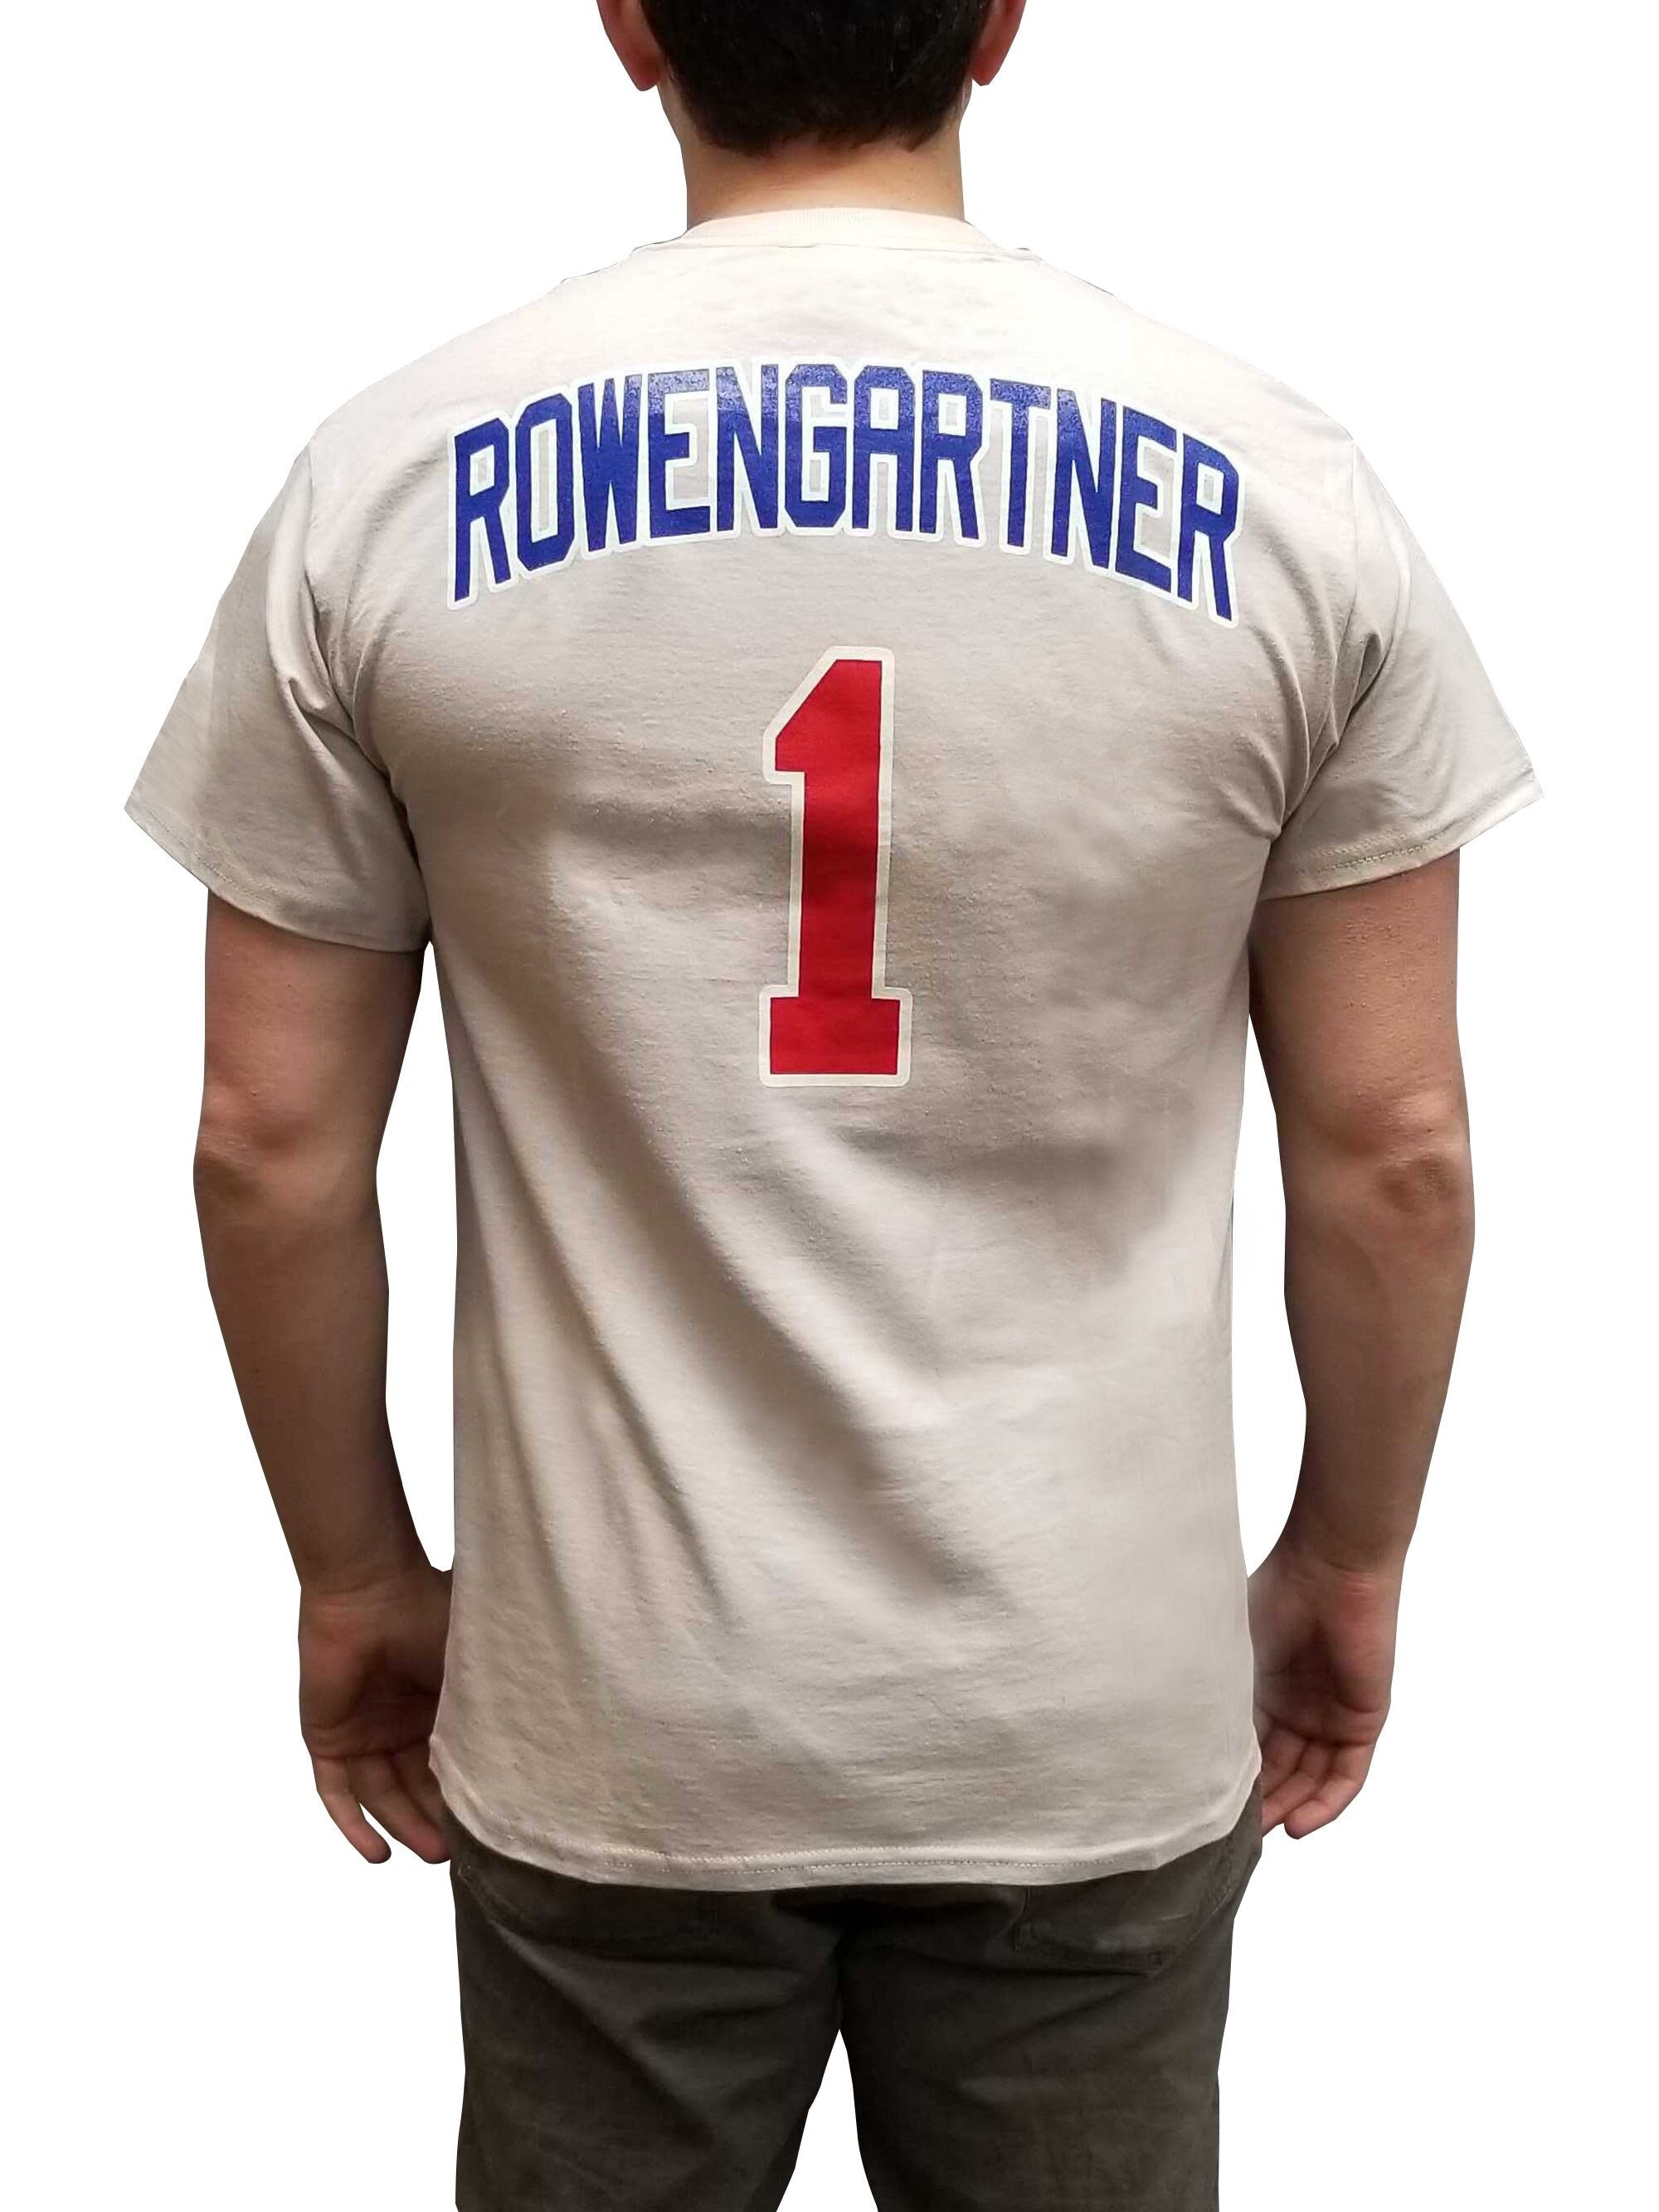 Rowengartner Jersey 